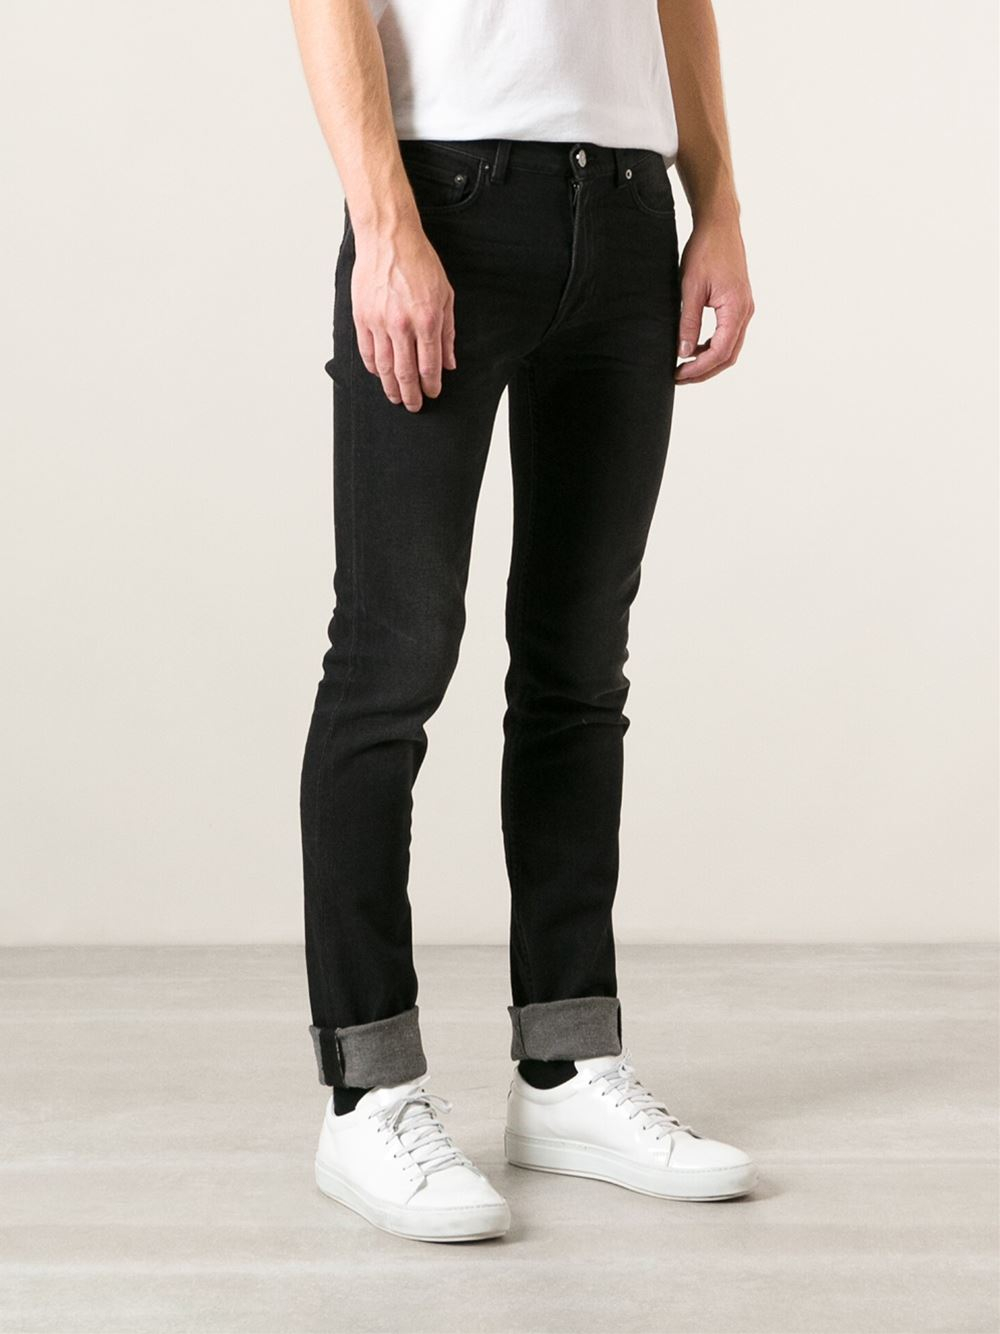 Lyst - Acne Studios Damage Jeans in Black for Men